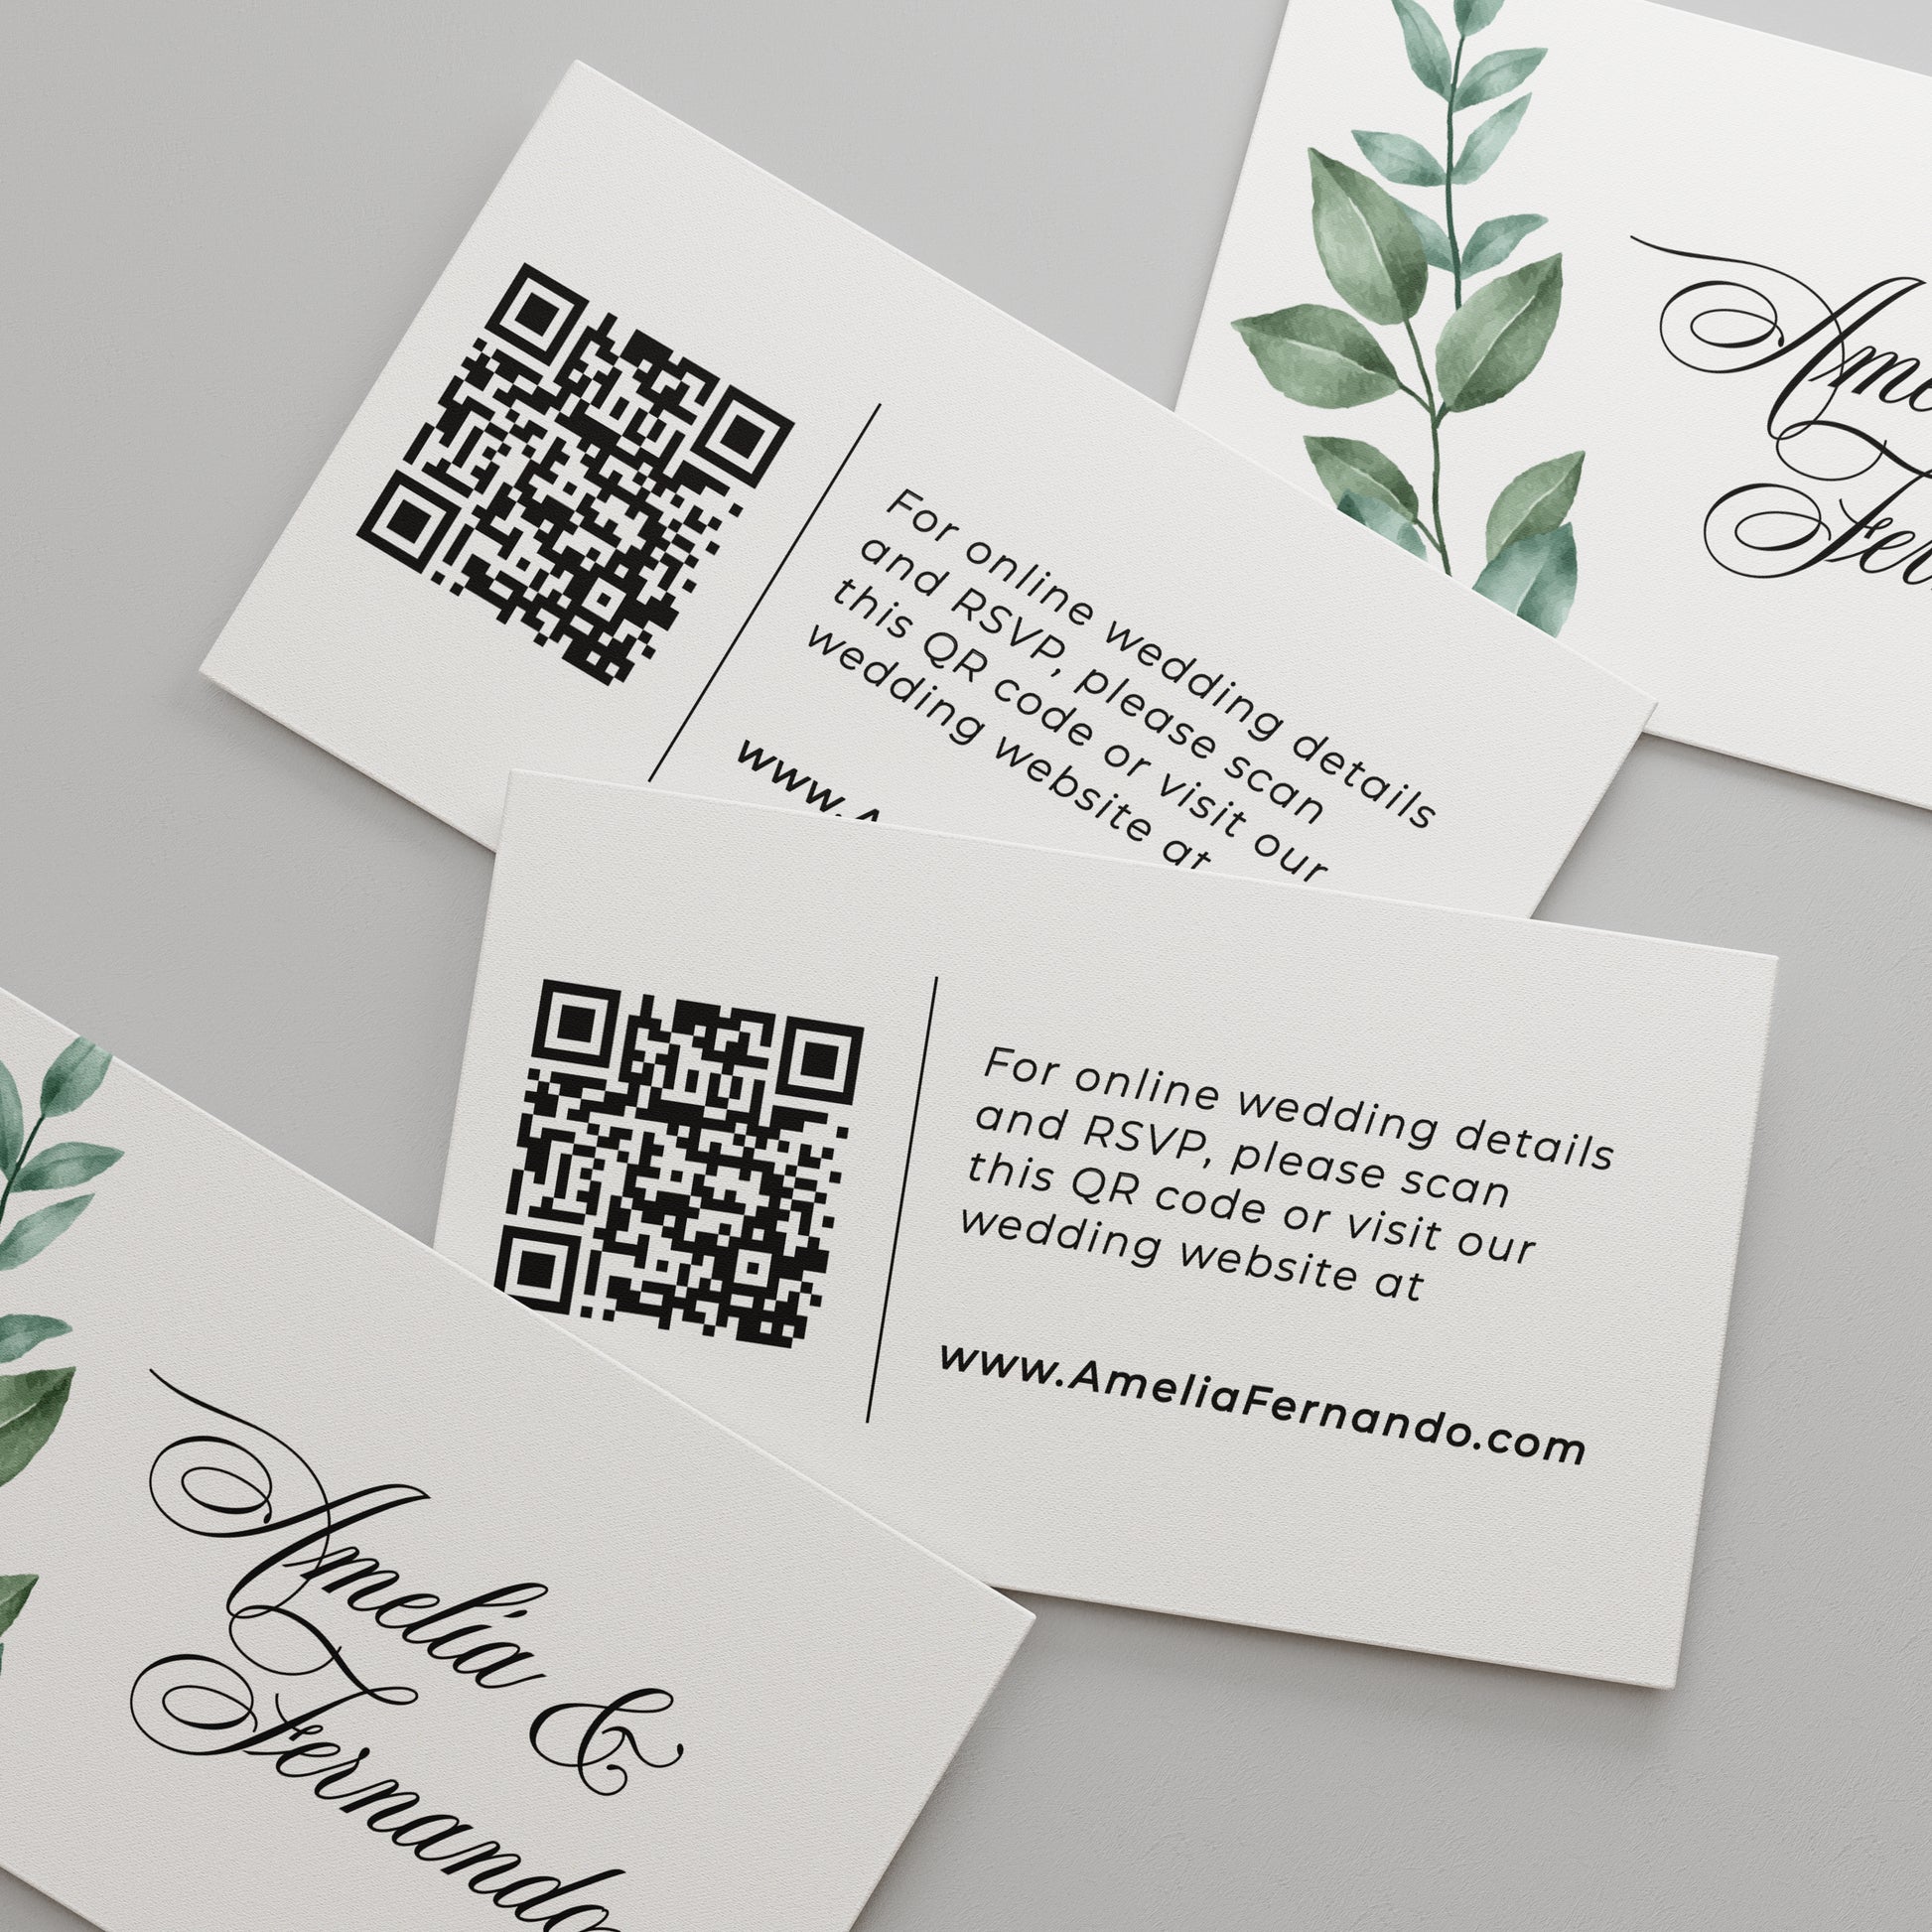 wedding website cards  with qr code - XOXOKristen